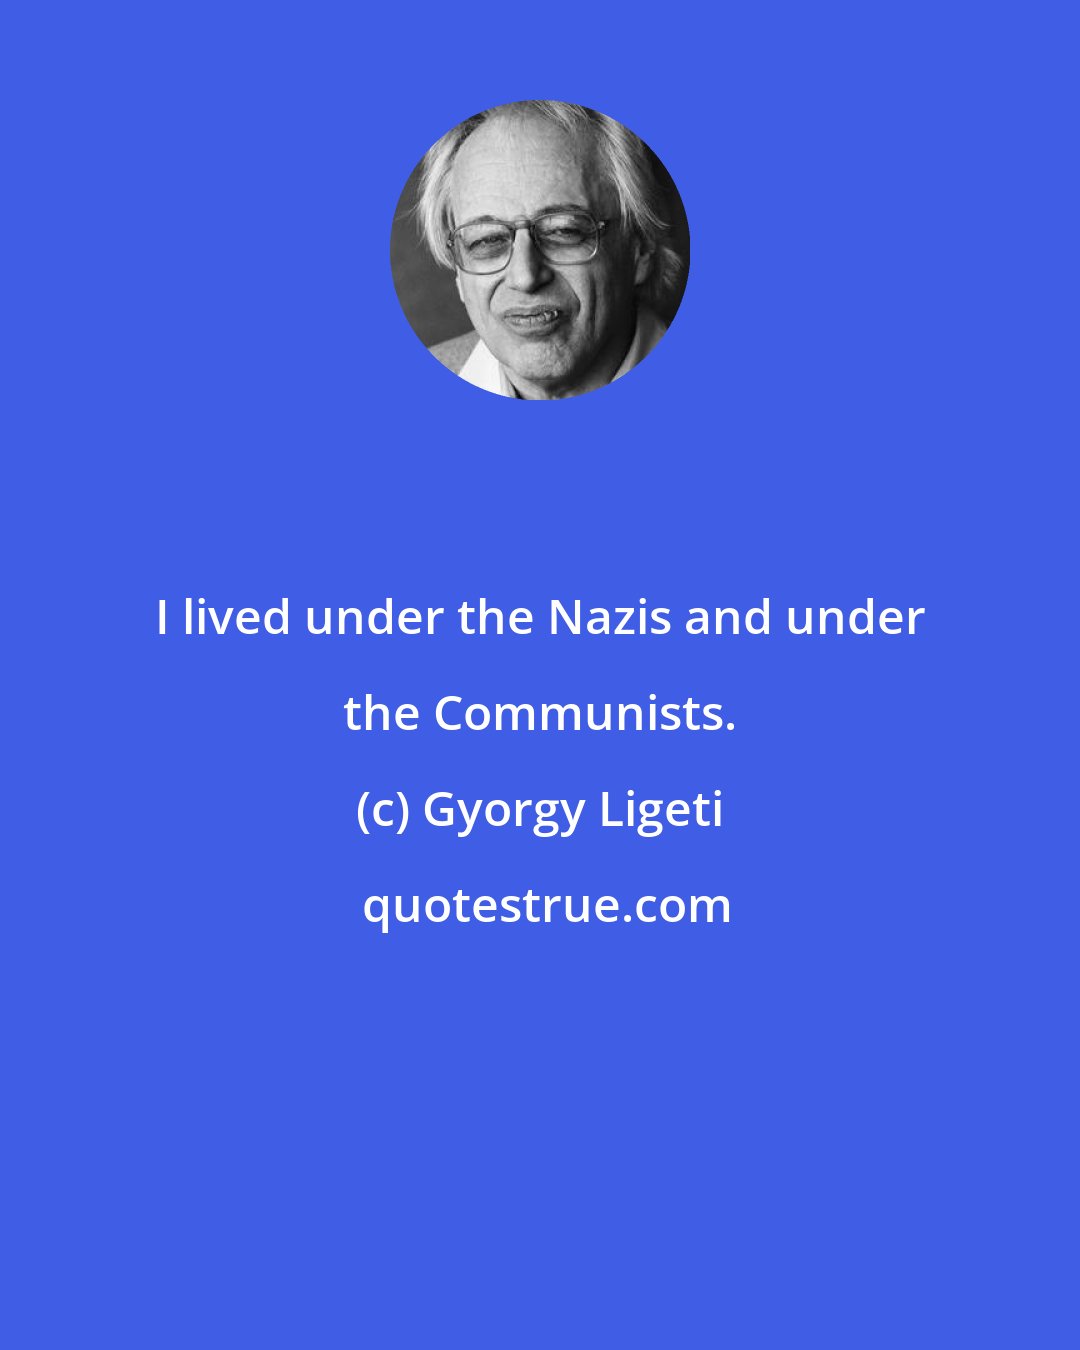 Gyorgy Ligeti: I lived under the Nazis and under the Communists.